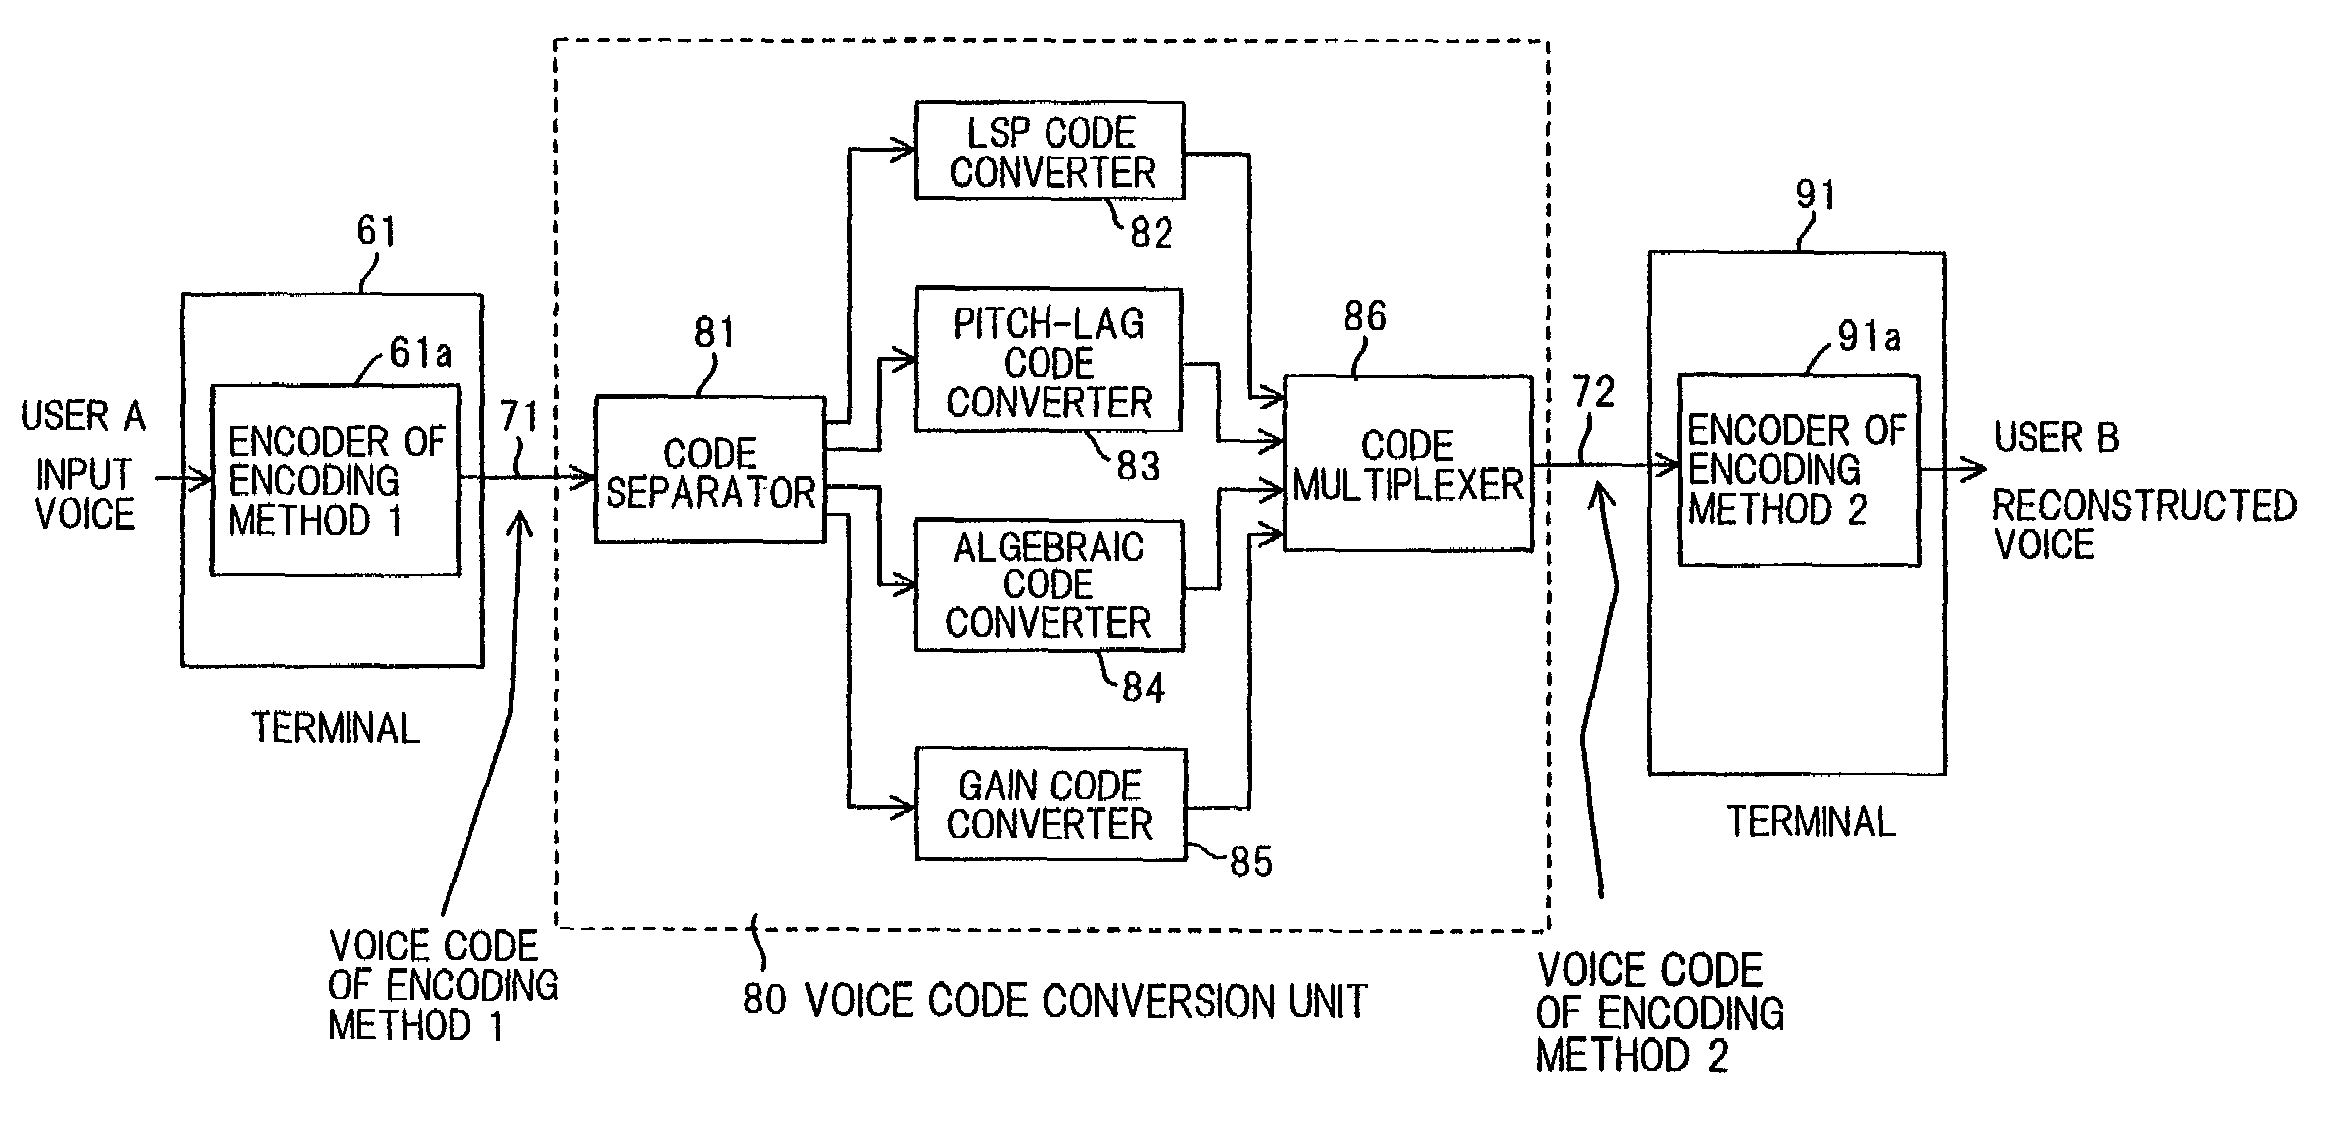 Voice code conversion apparatus